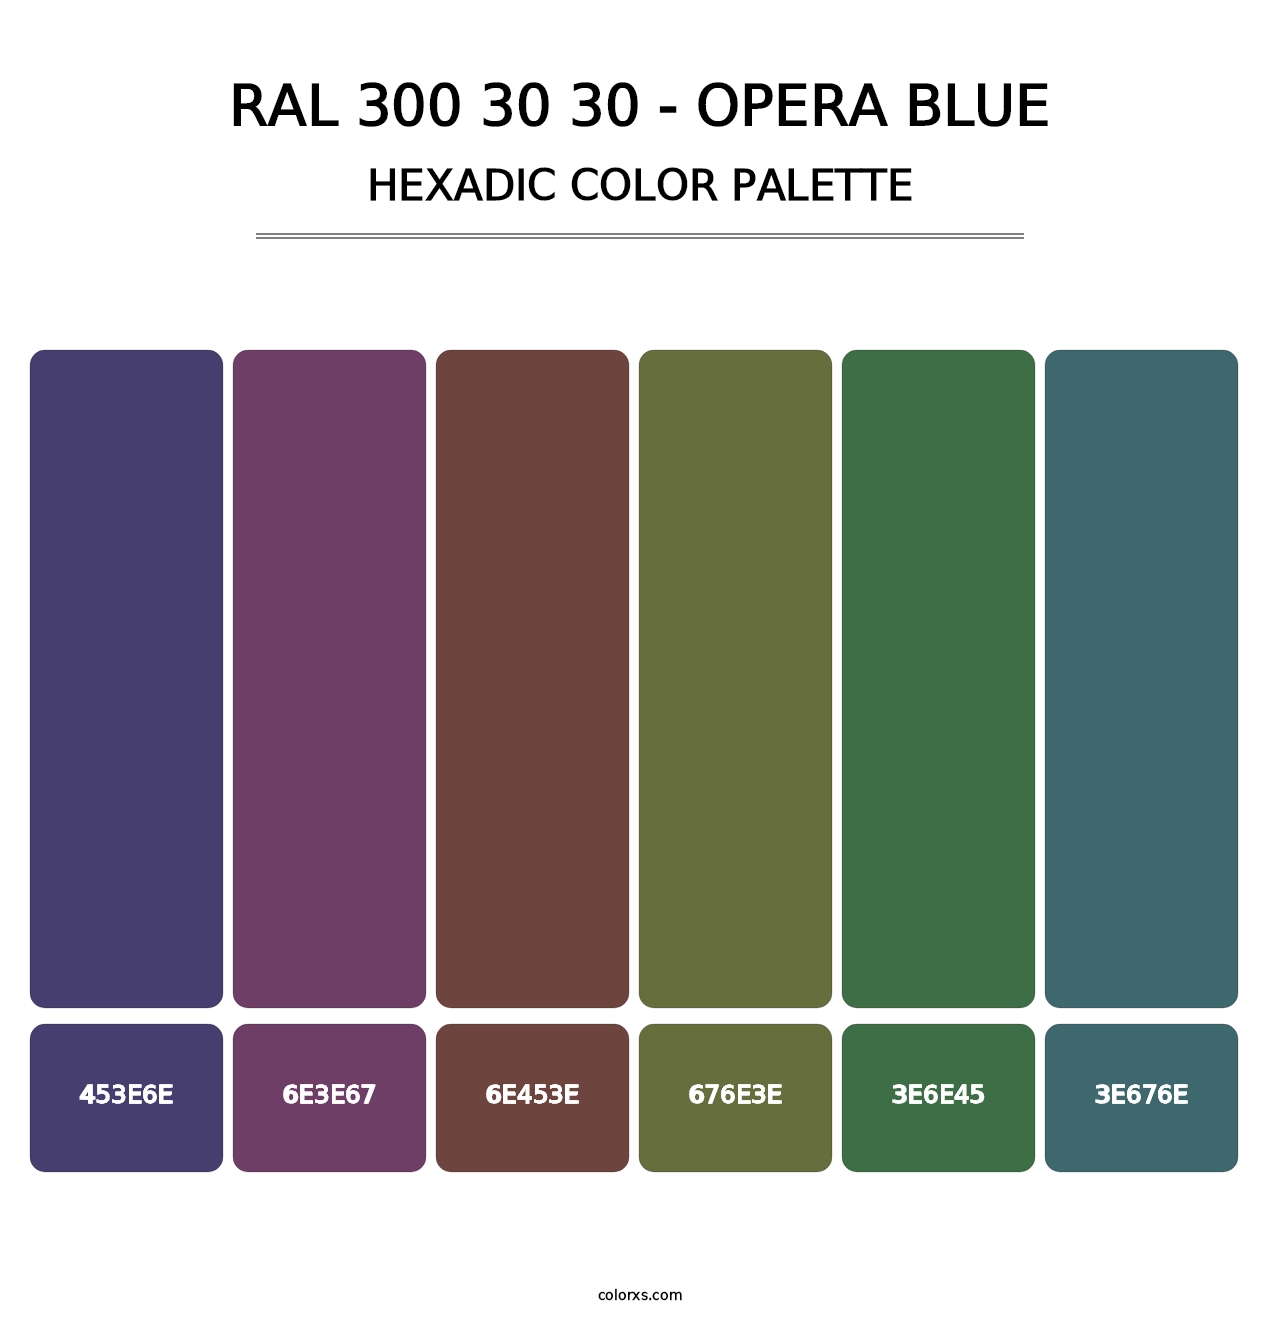 RAL 300 30 30 - Opera Blue - Hexadic Color Palette